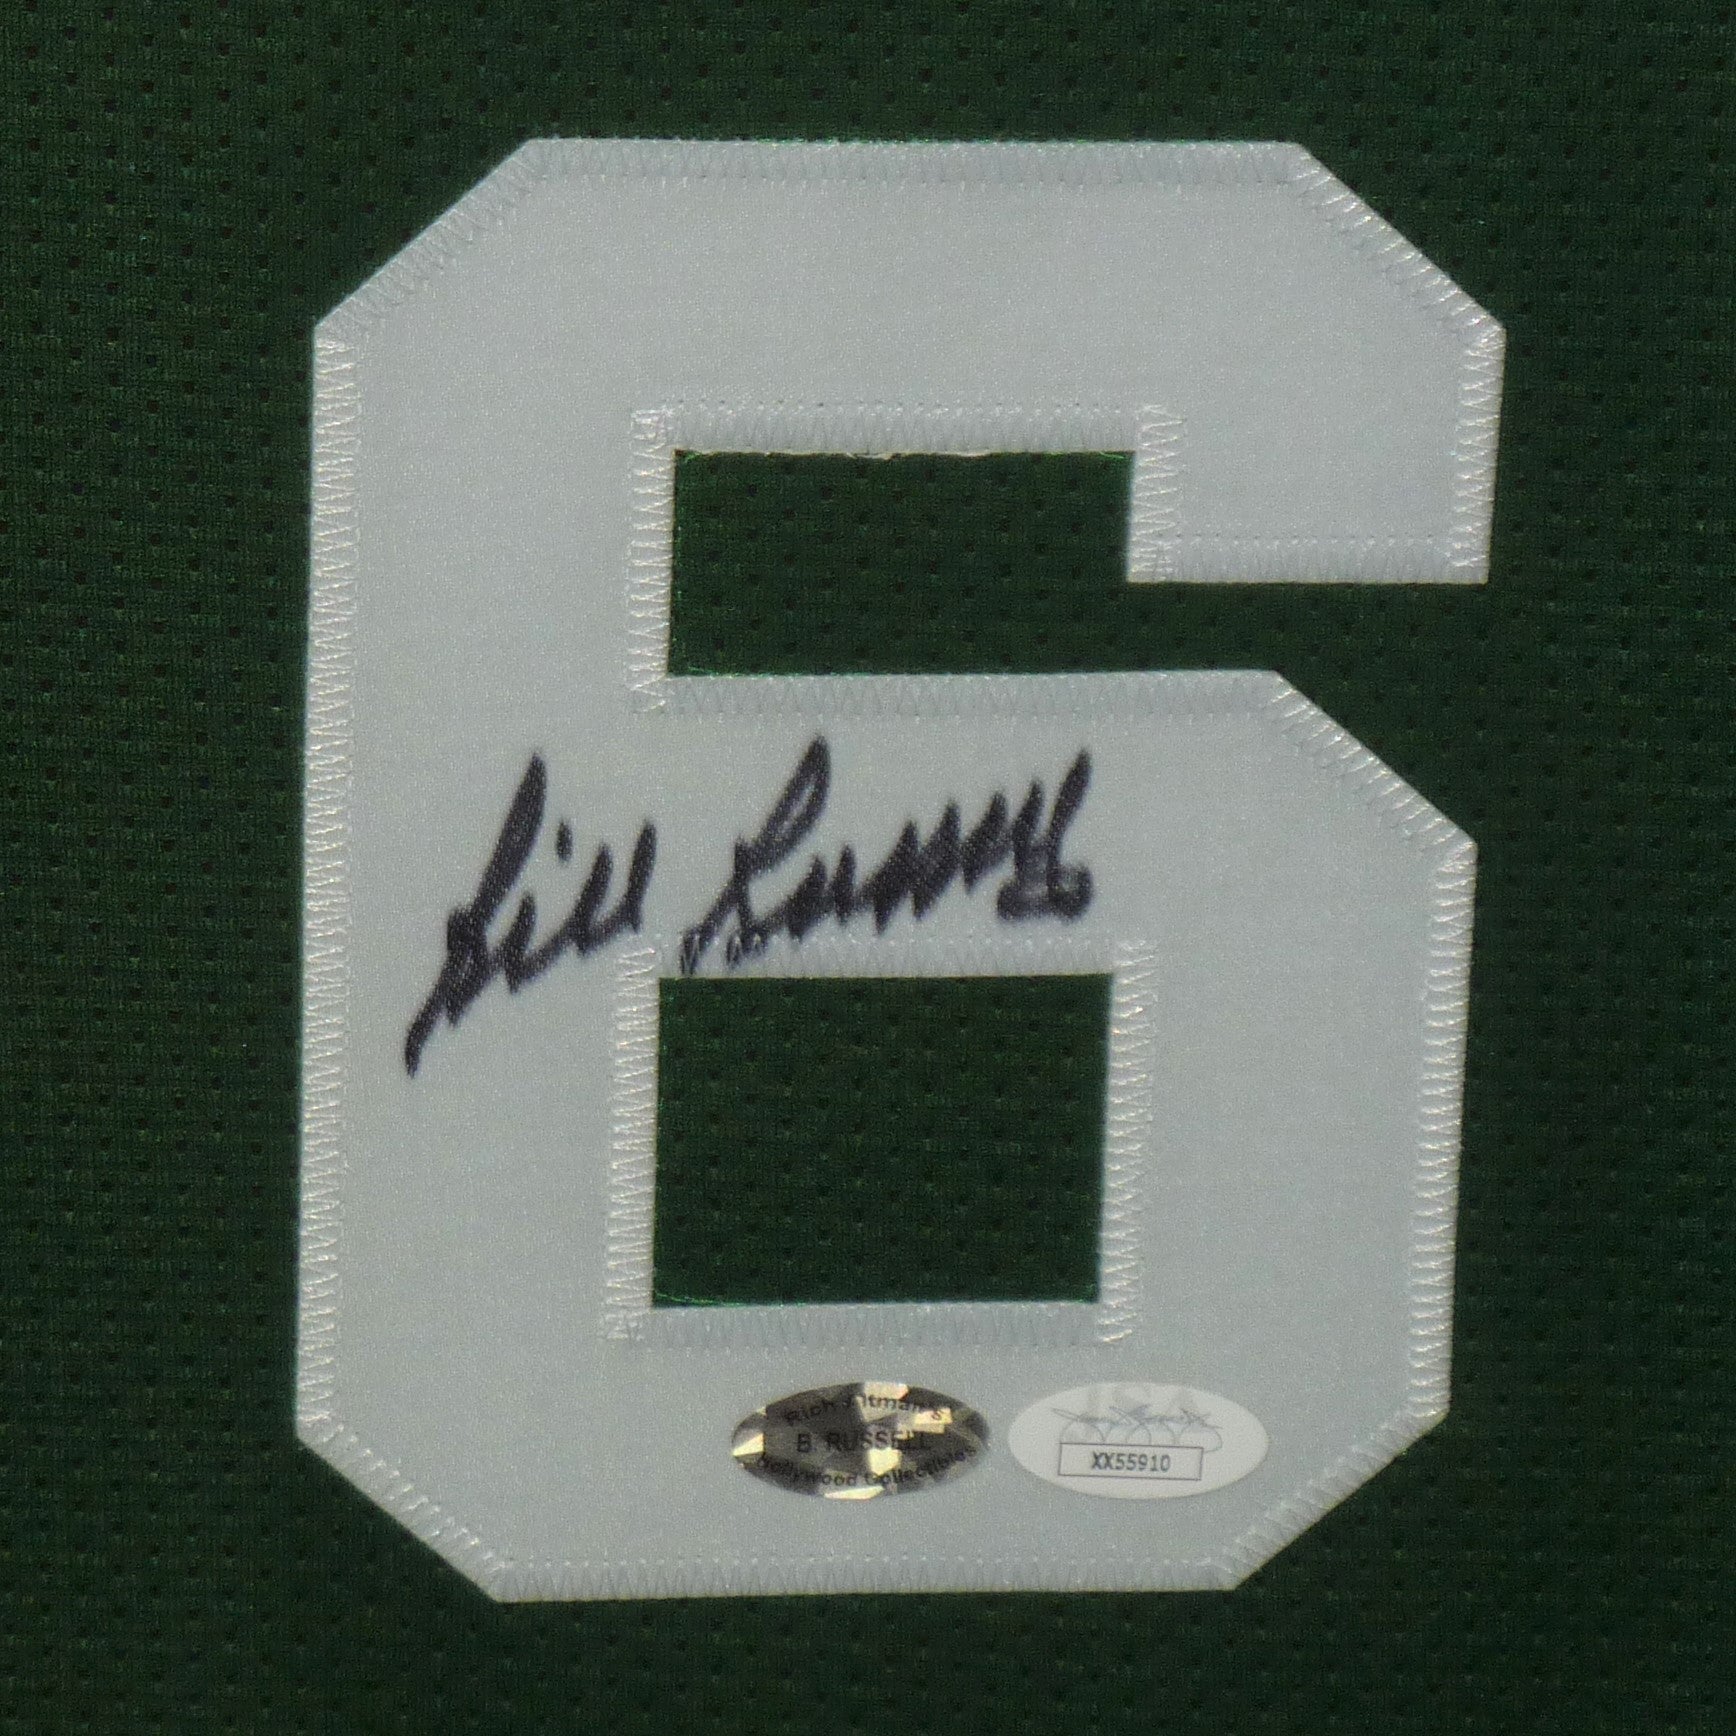 Boston Celtics Bill Russell Autographed Framed Green Jersey 11x NBA  Champs PSA/DNA #W28898 - Mill Creek Sports